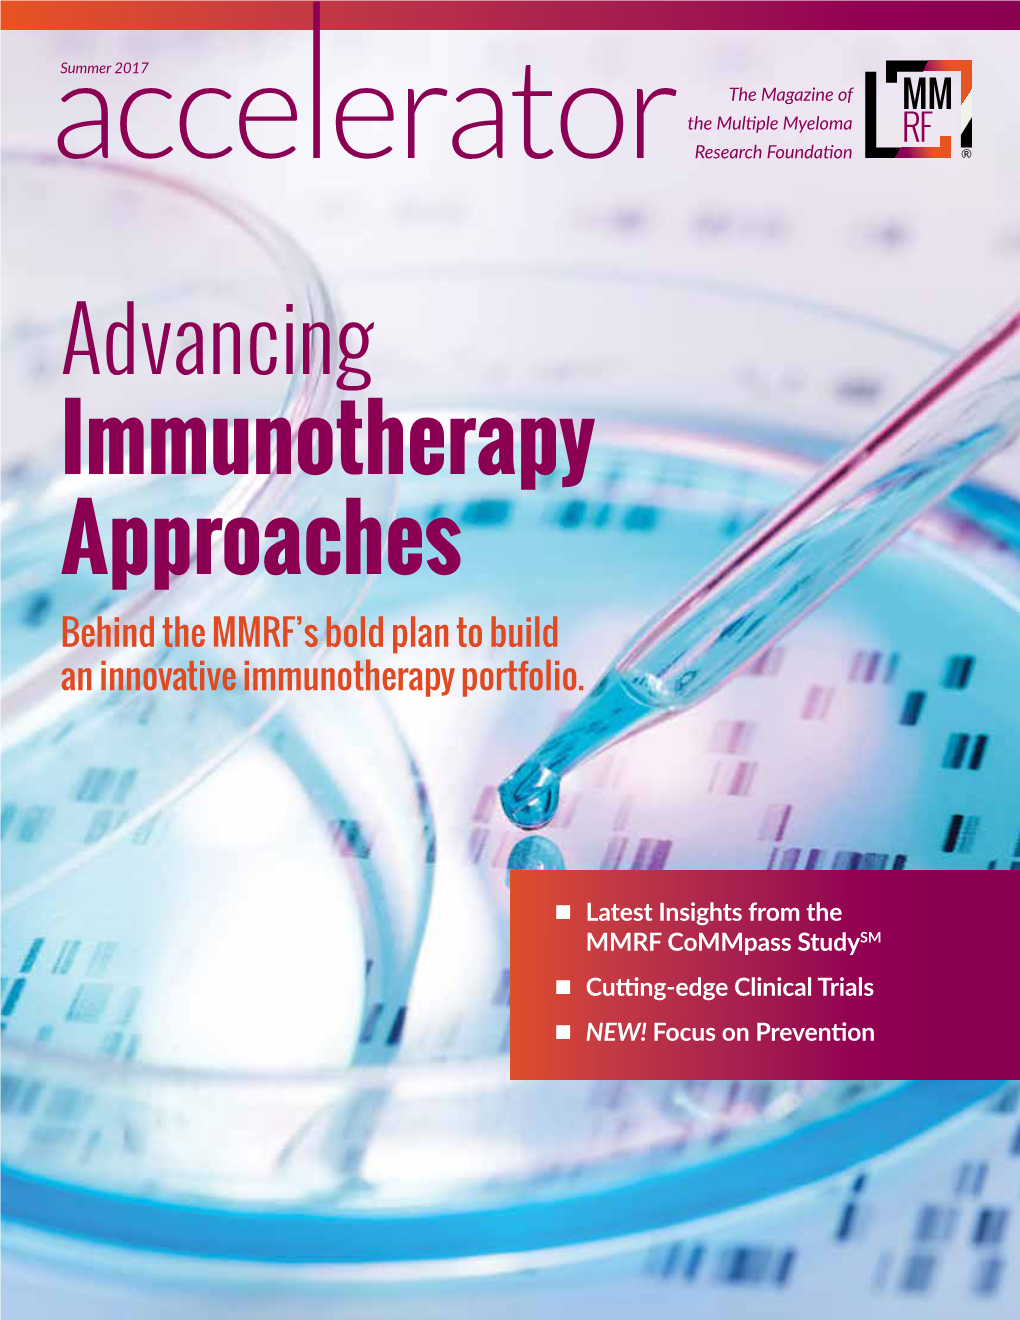 MMRF’S Bold Plan to Build an Innovative Immunotherapy Portfolio